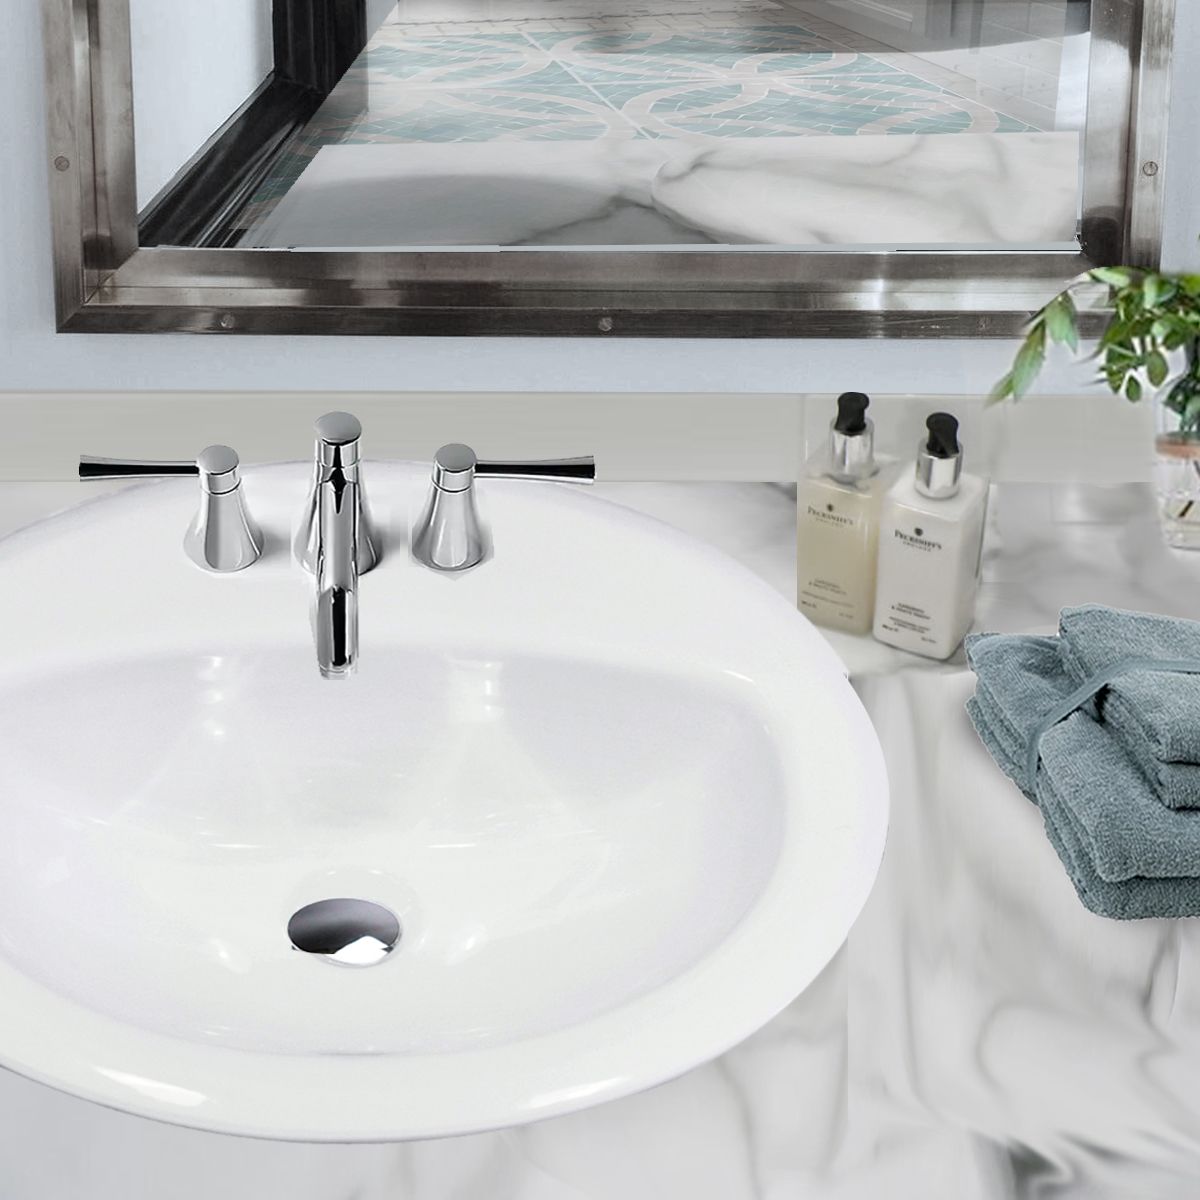 Nantucket Sinks 20.25 Inch Drop-In Ceramic Vanity Sink DI2017-4